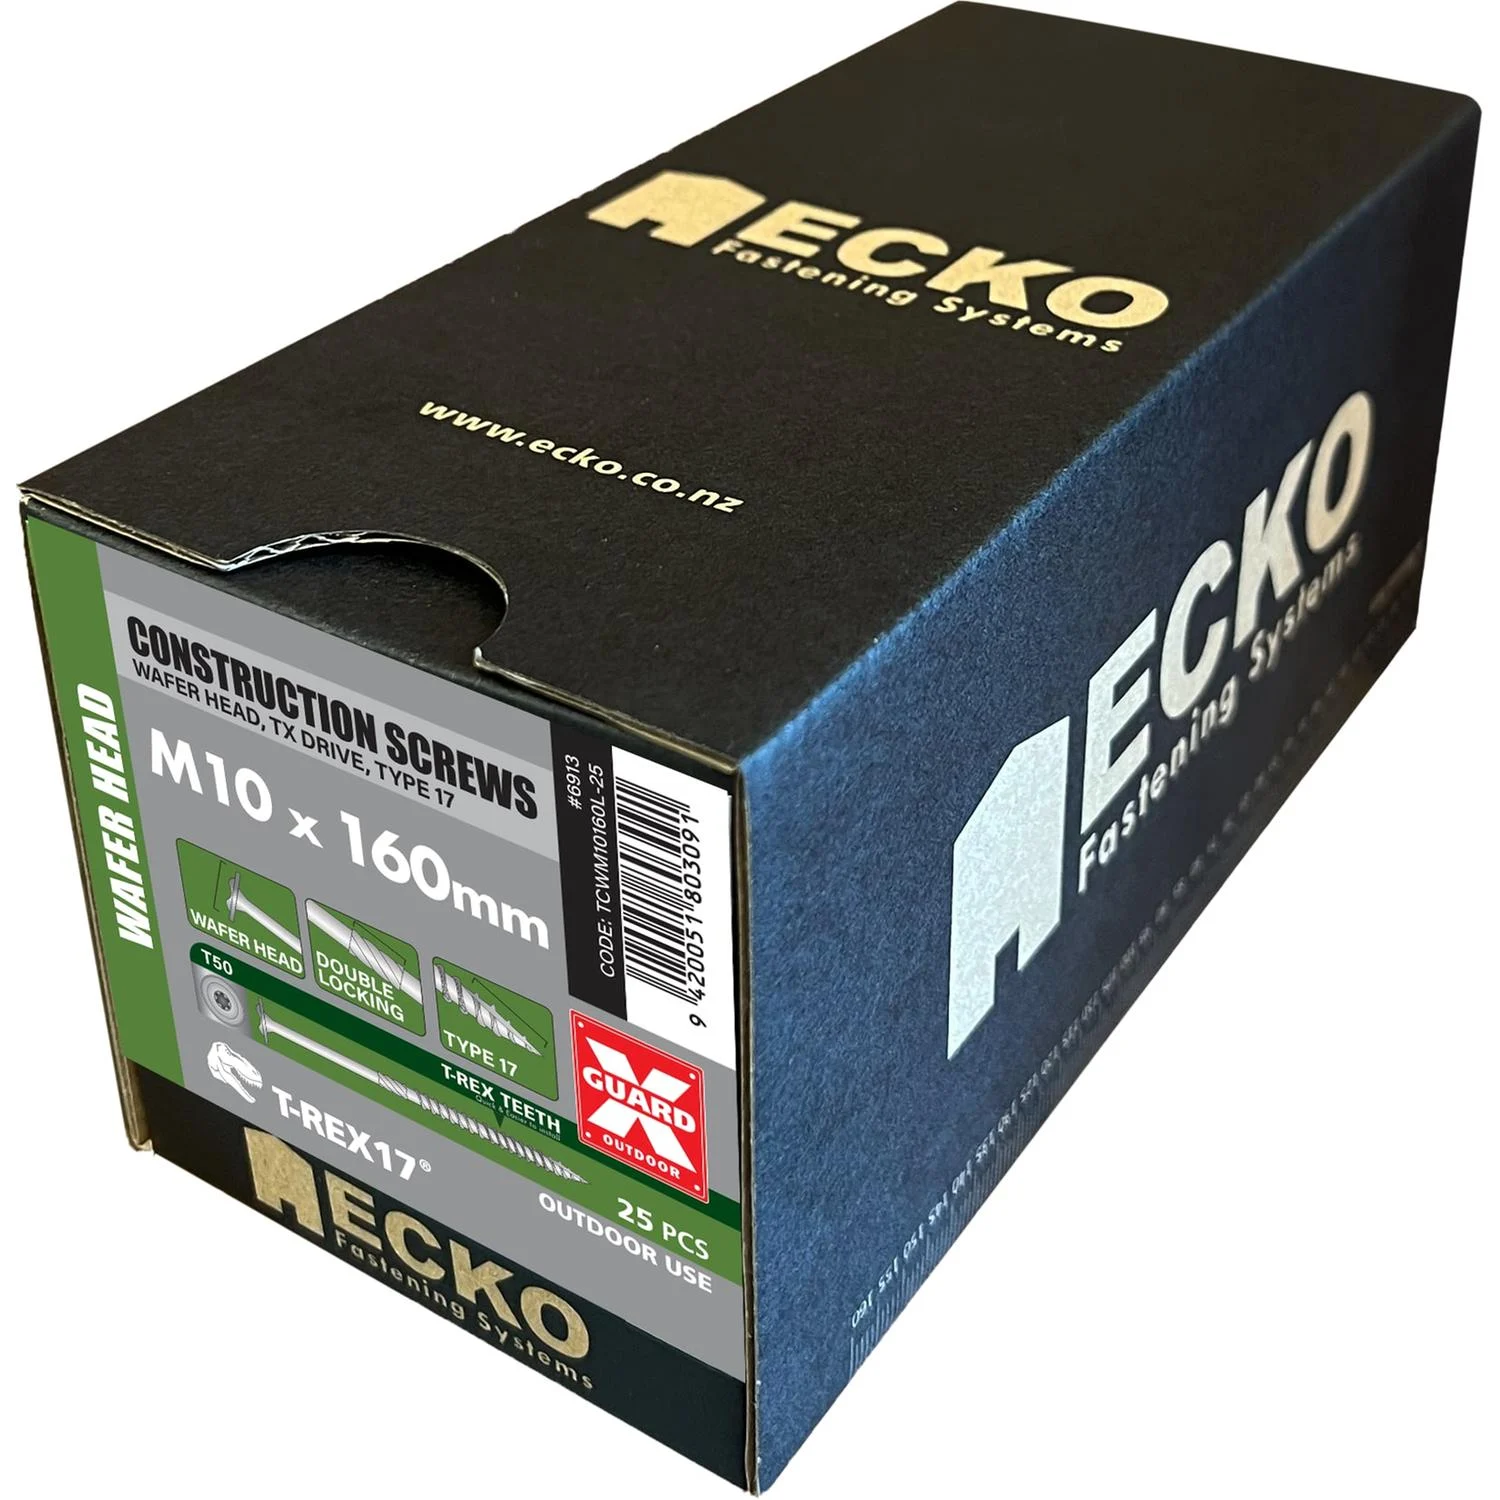 Ecko T-Rex17 Construction Screws M10 X 160Mm (500 Pack)